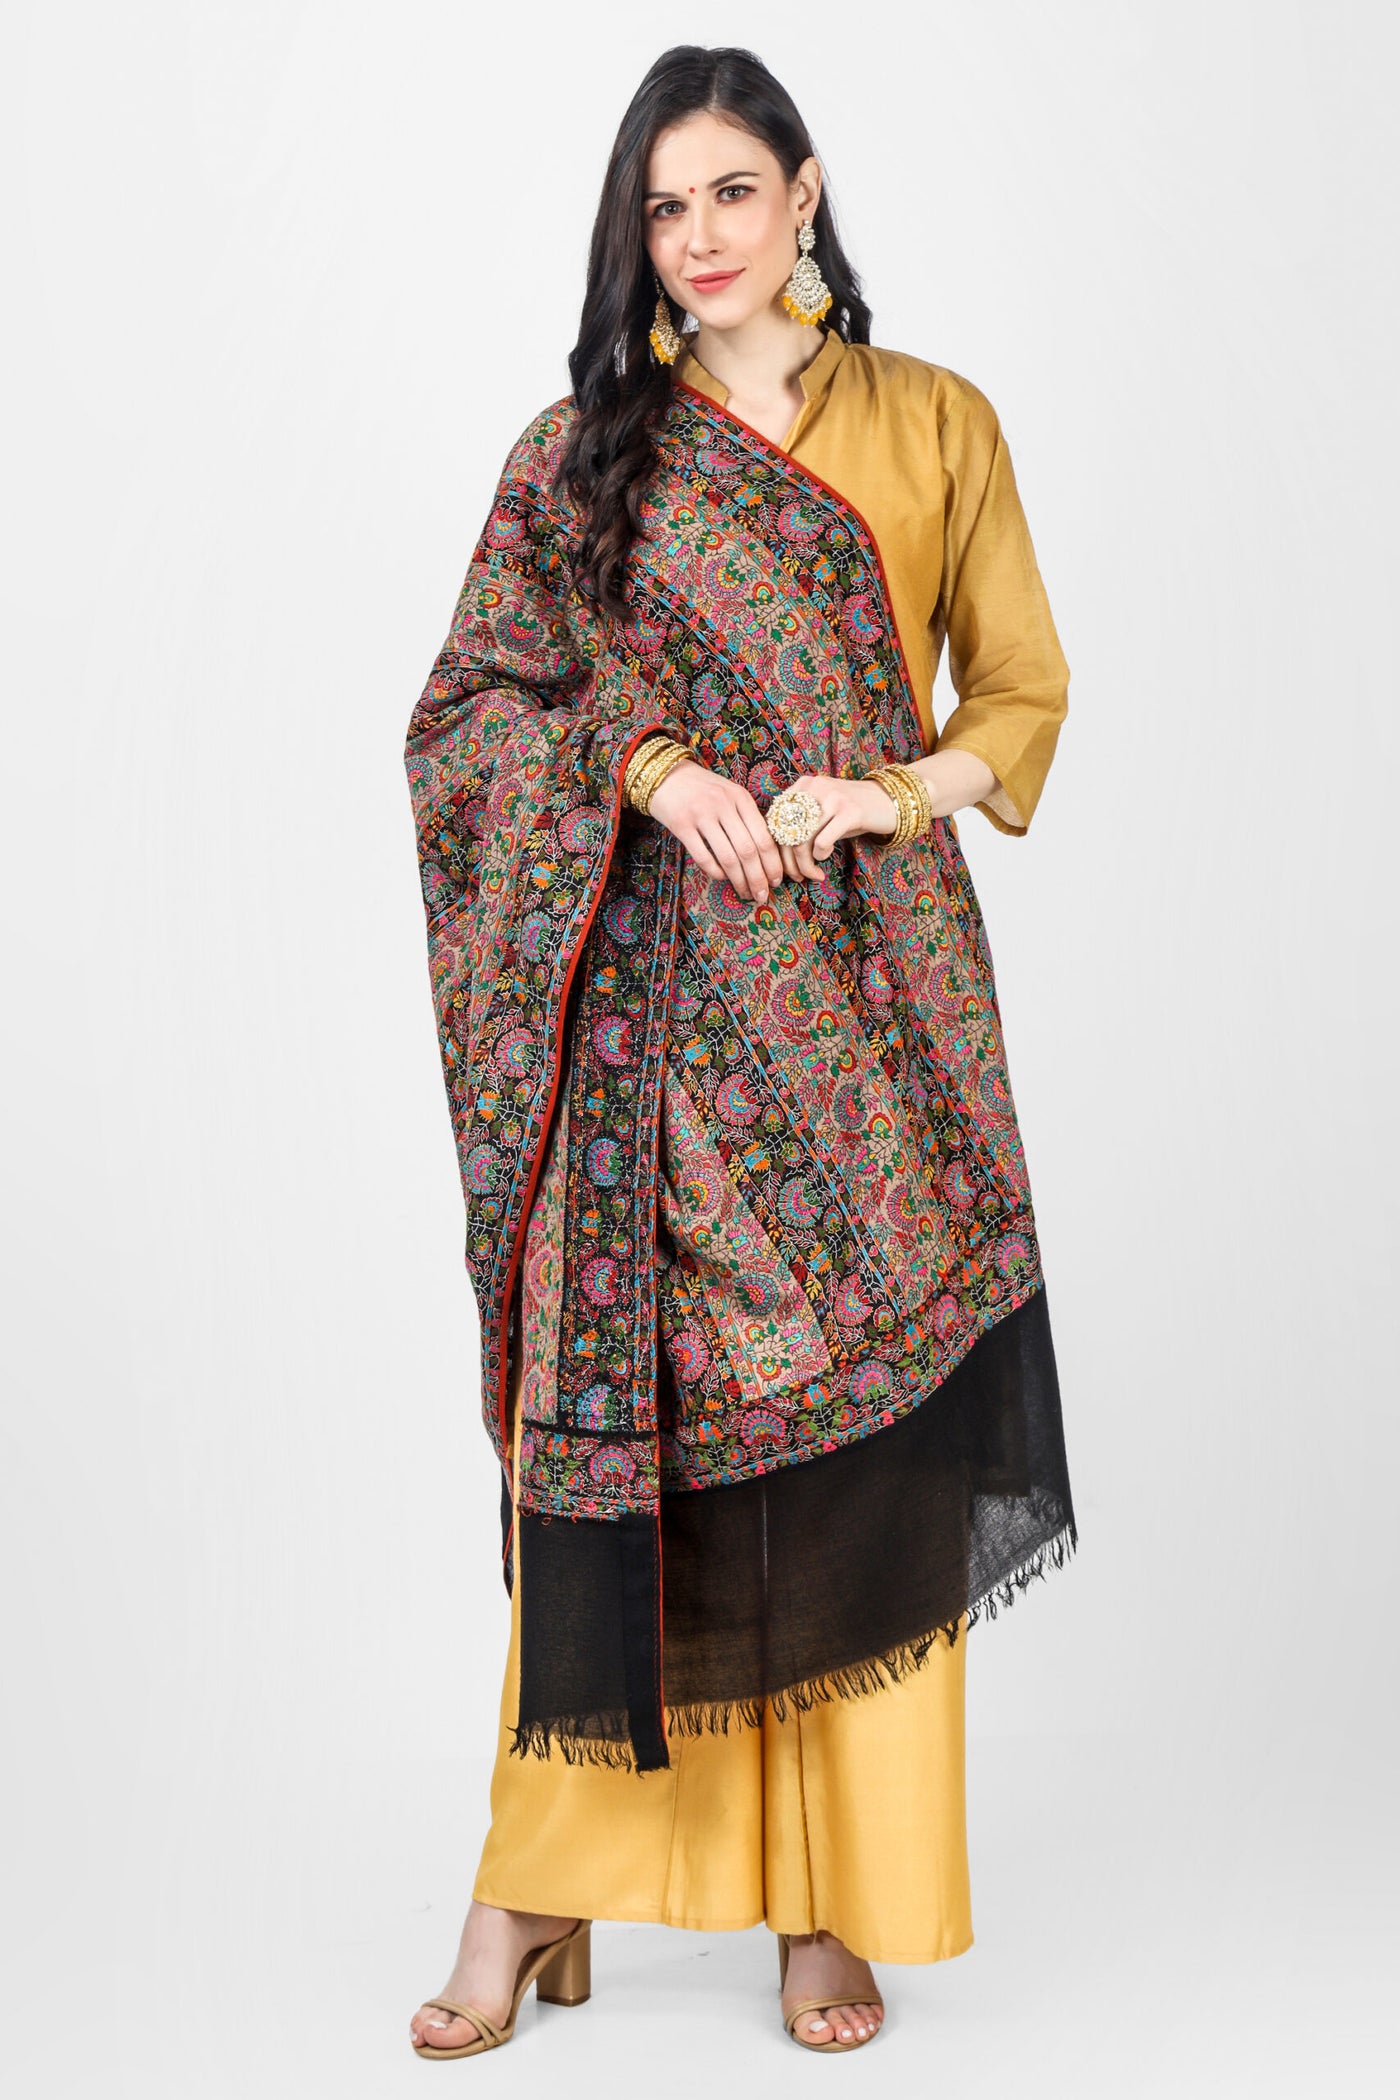 Black Pashmina sozni patched borders shawl